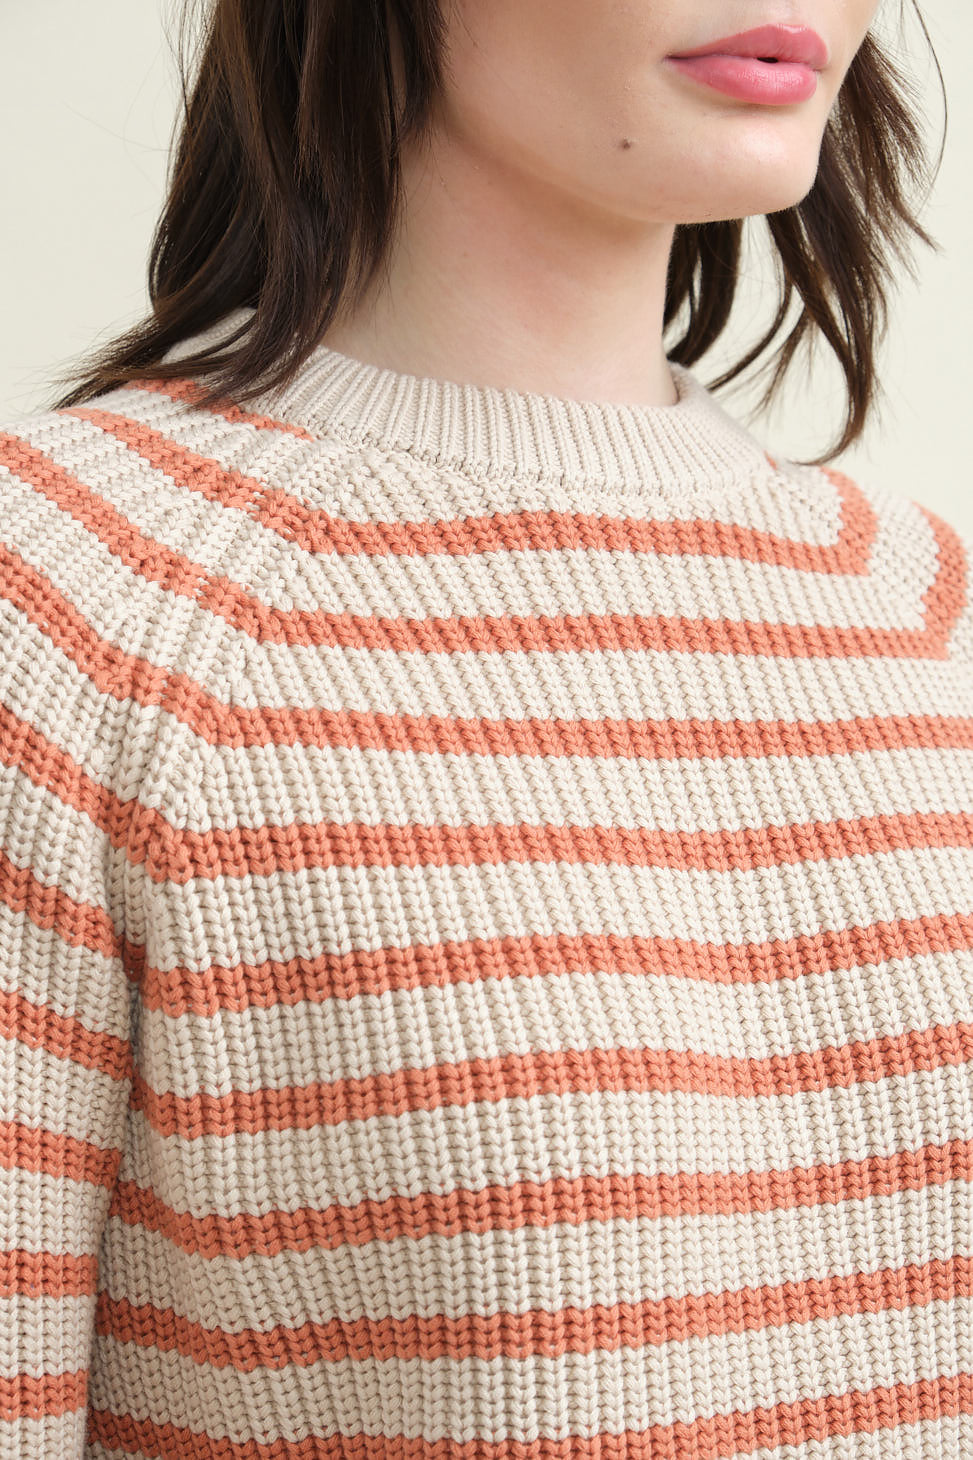 Detailing on Phoebe Stripe Sweater in Natural/Rose Ash